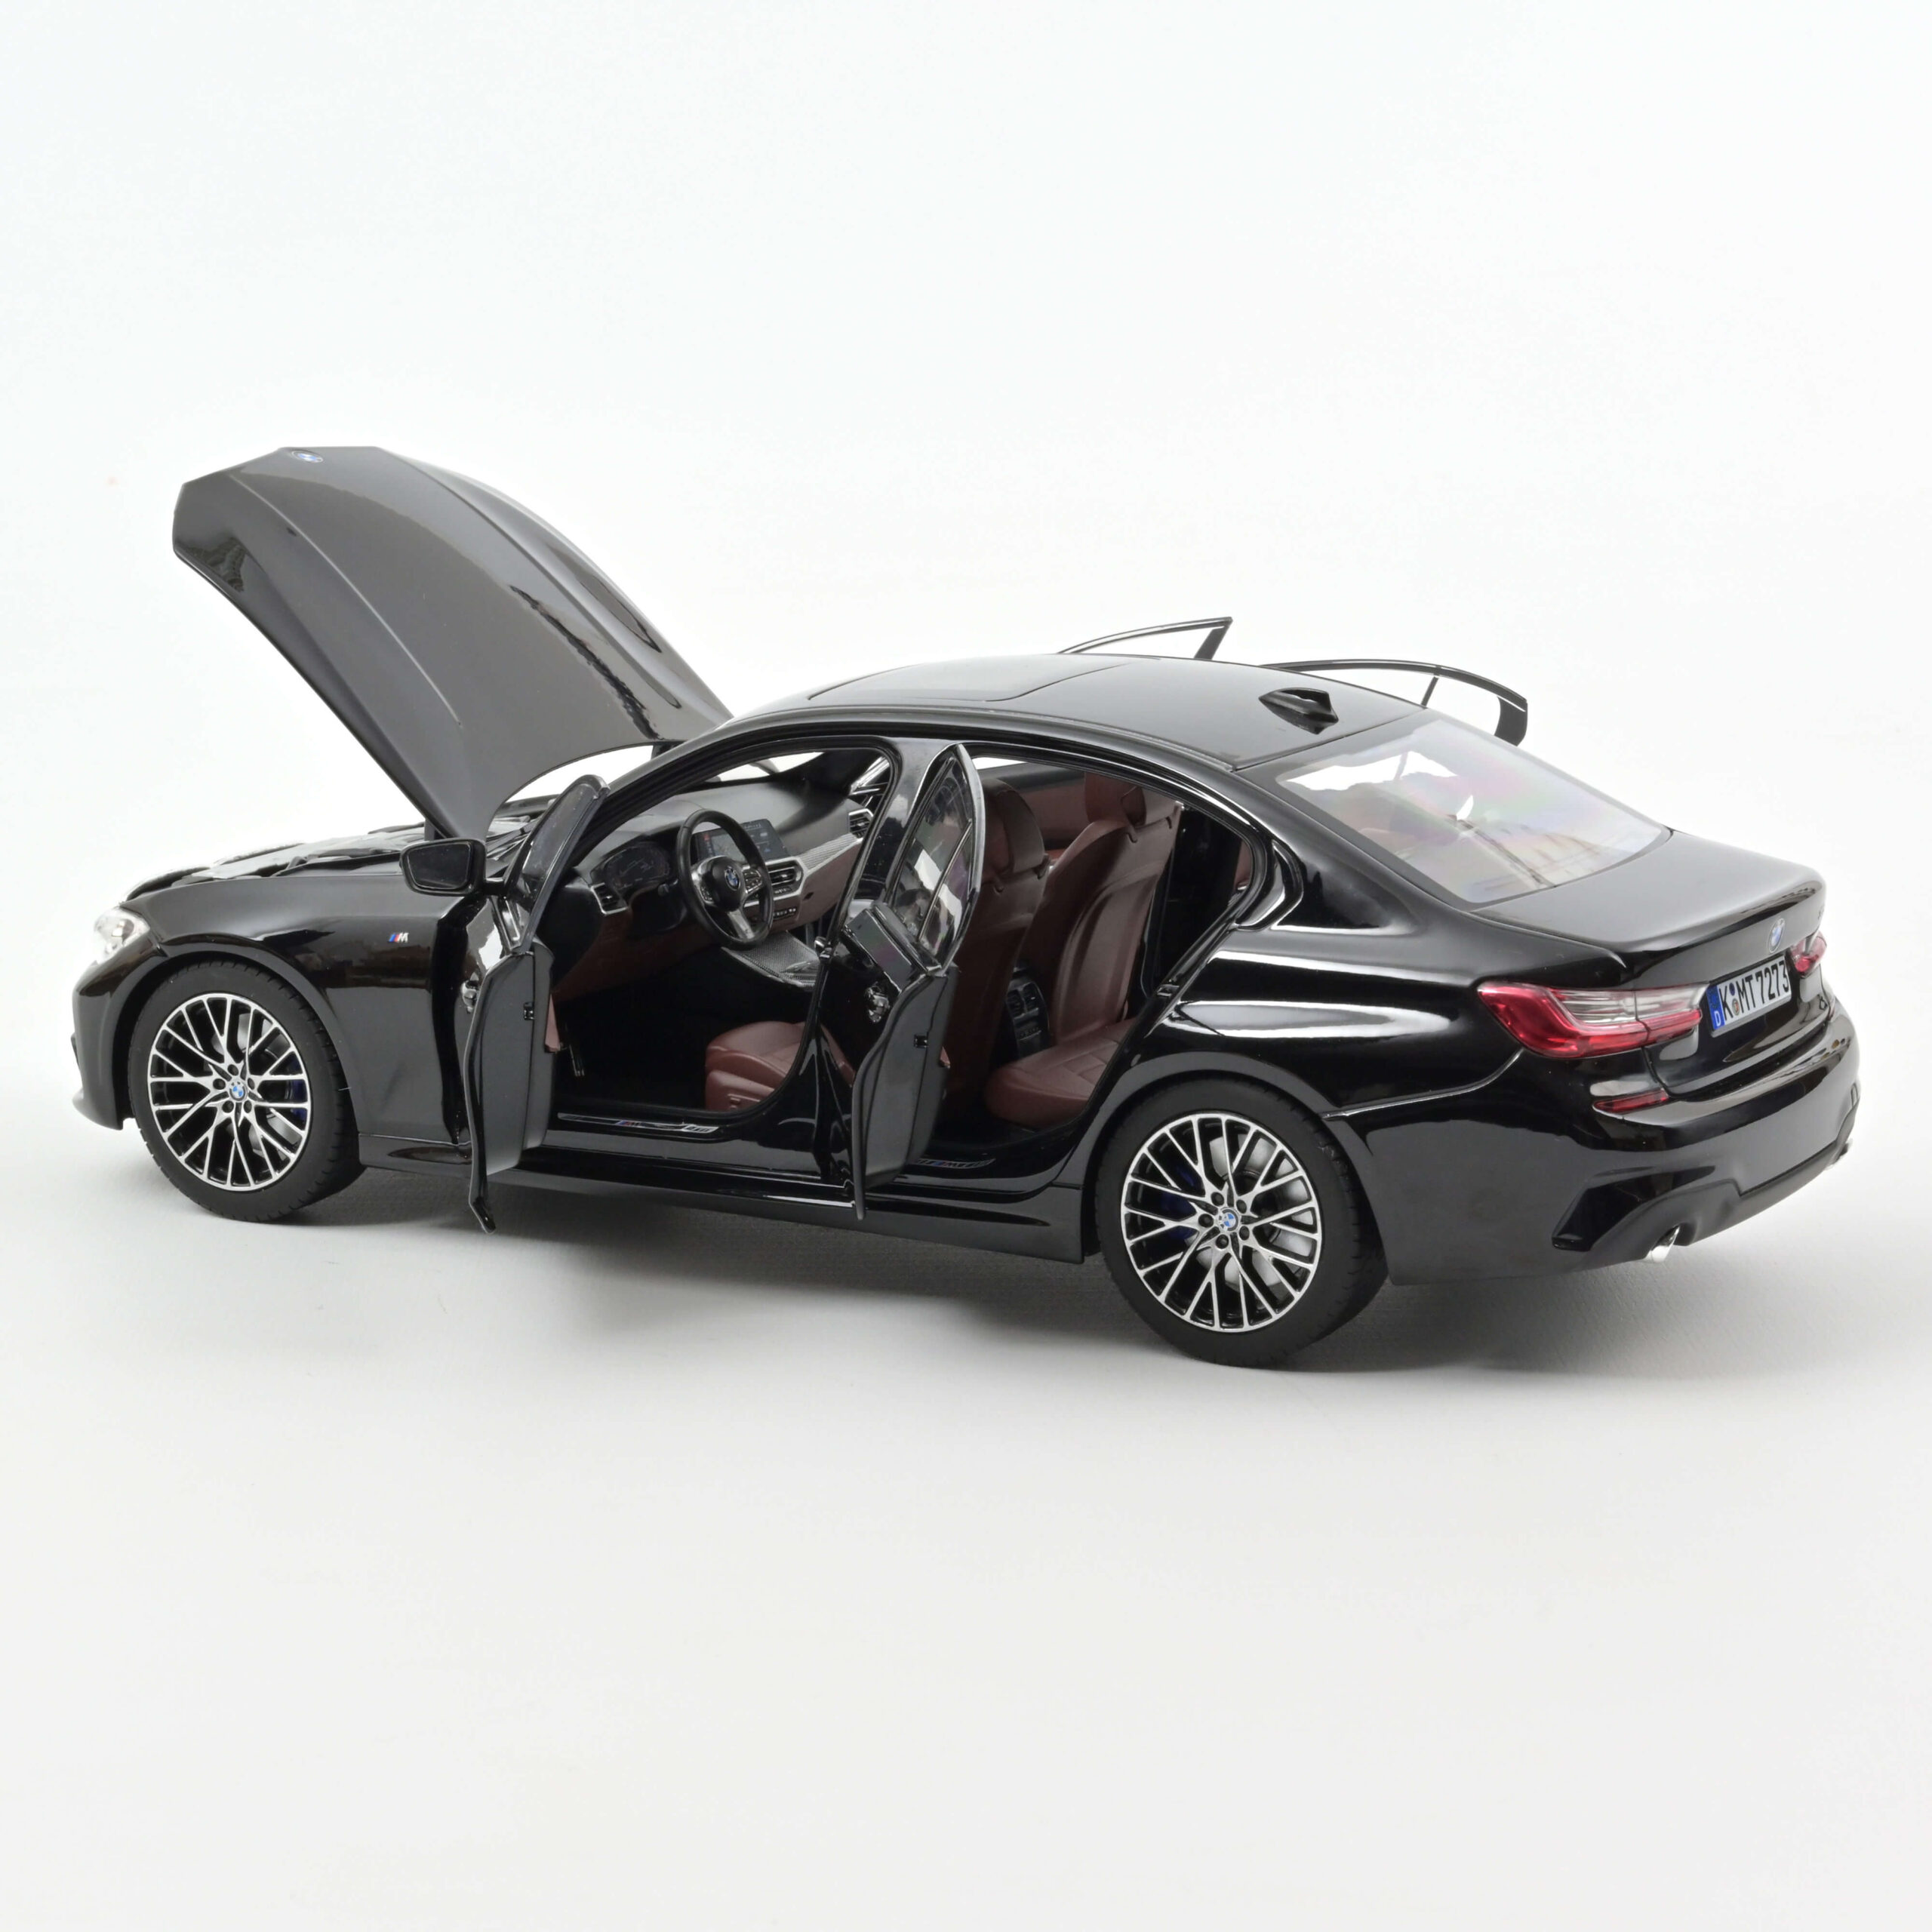 BMW 330i 2019 Black metallic